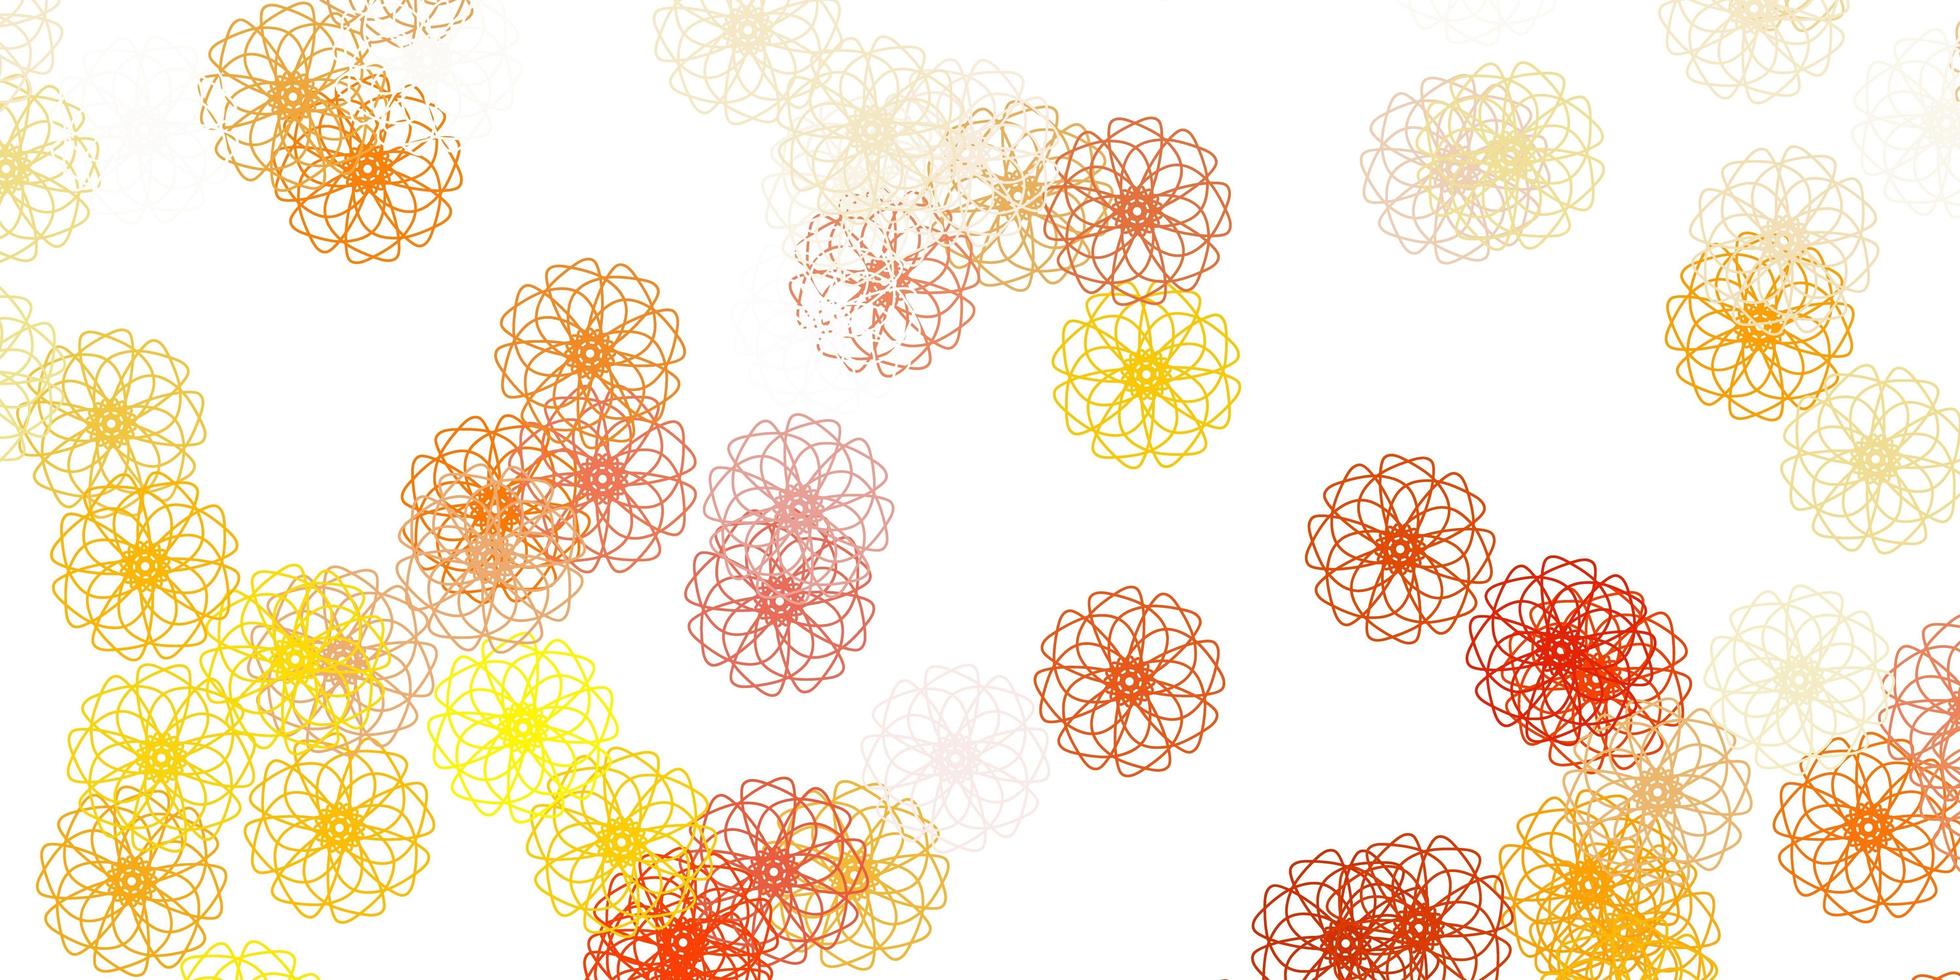 ljusgul vektor doodle textur med blommor